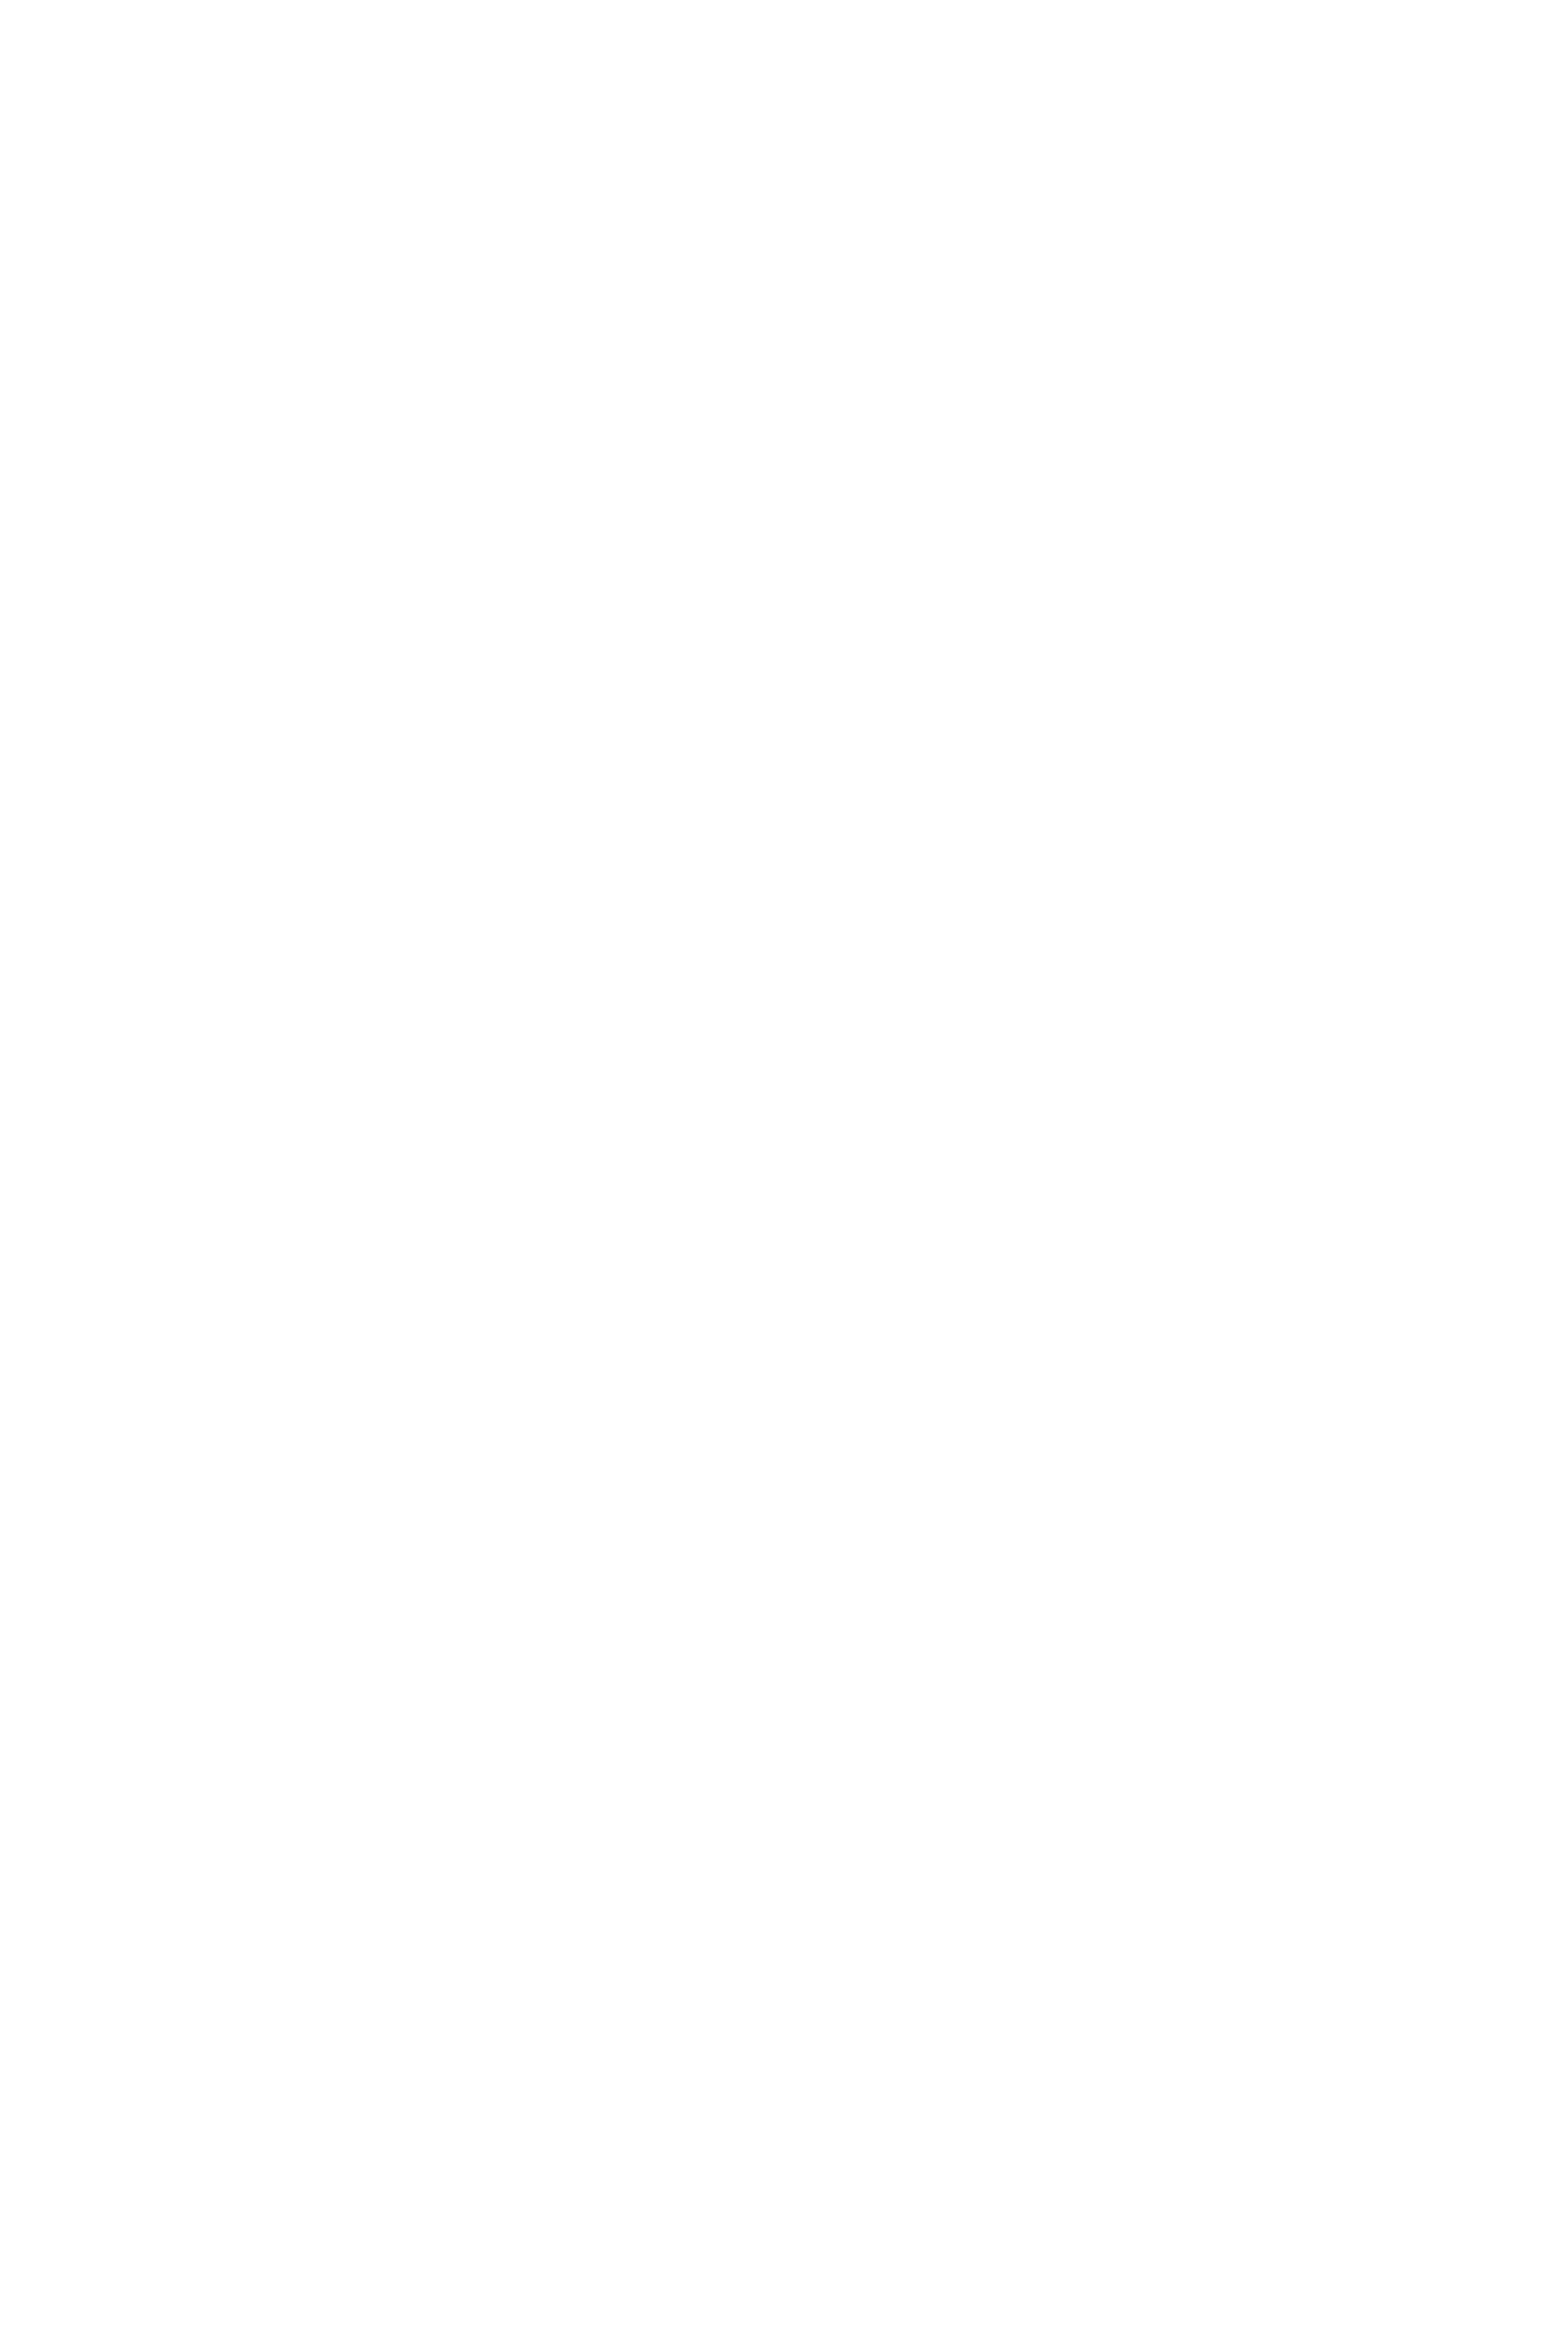 Вязаный джемпер по картине Ван Гога "Ваза с маками" бренда "Таня Исаева"